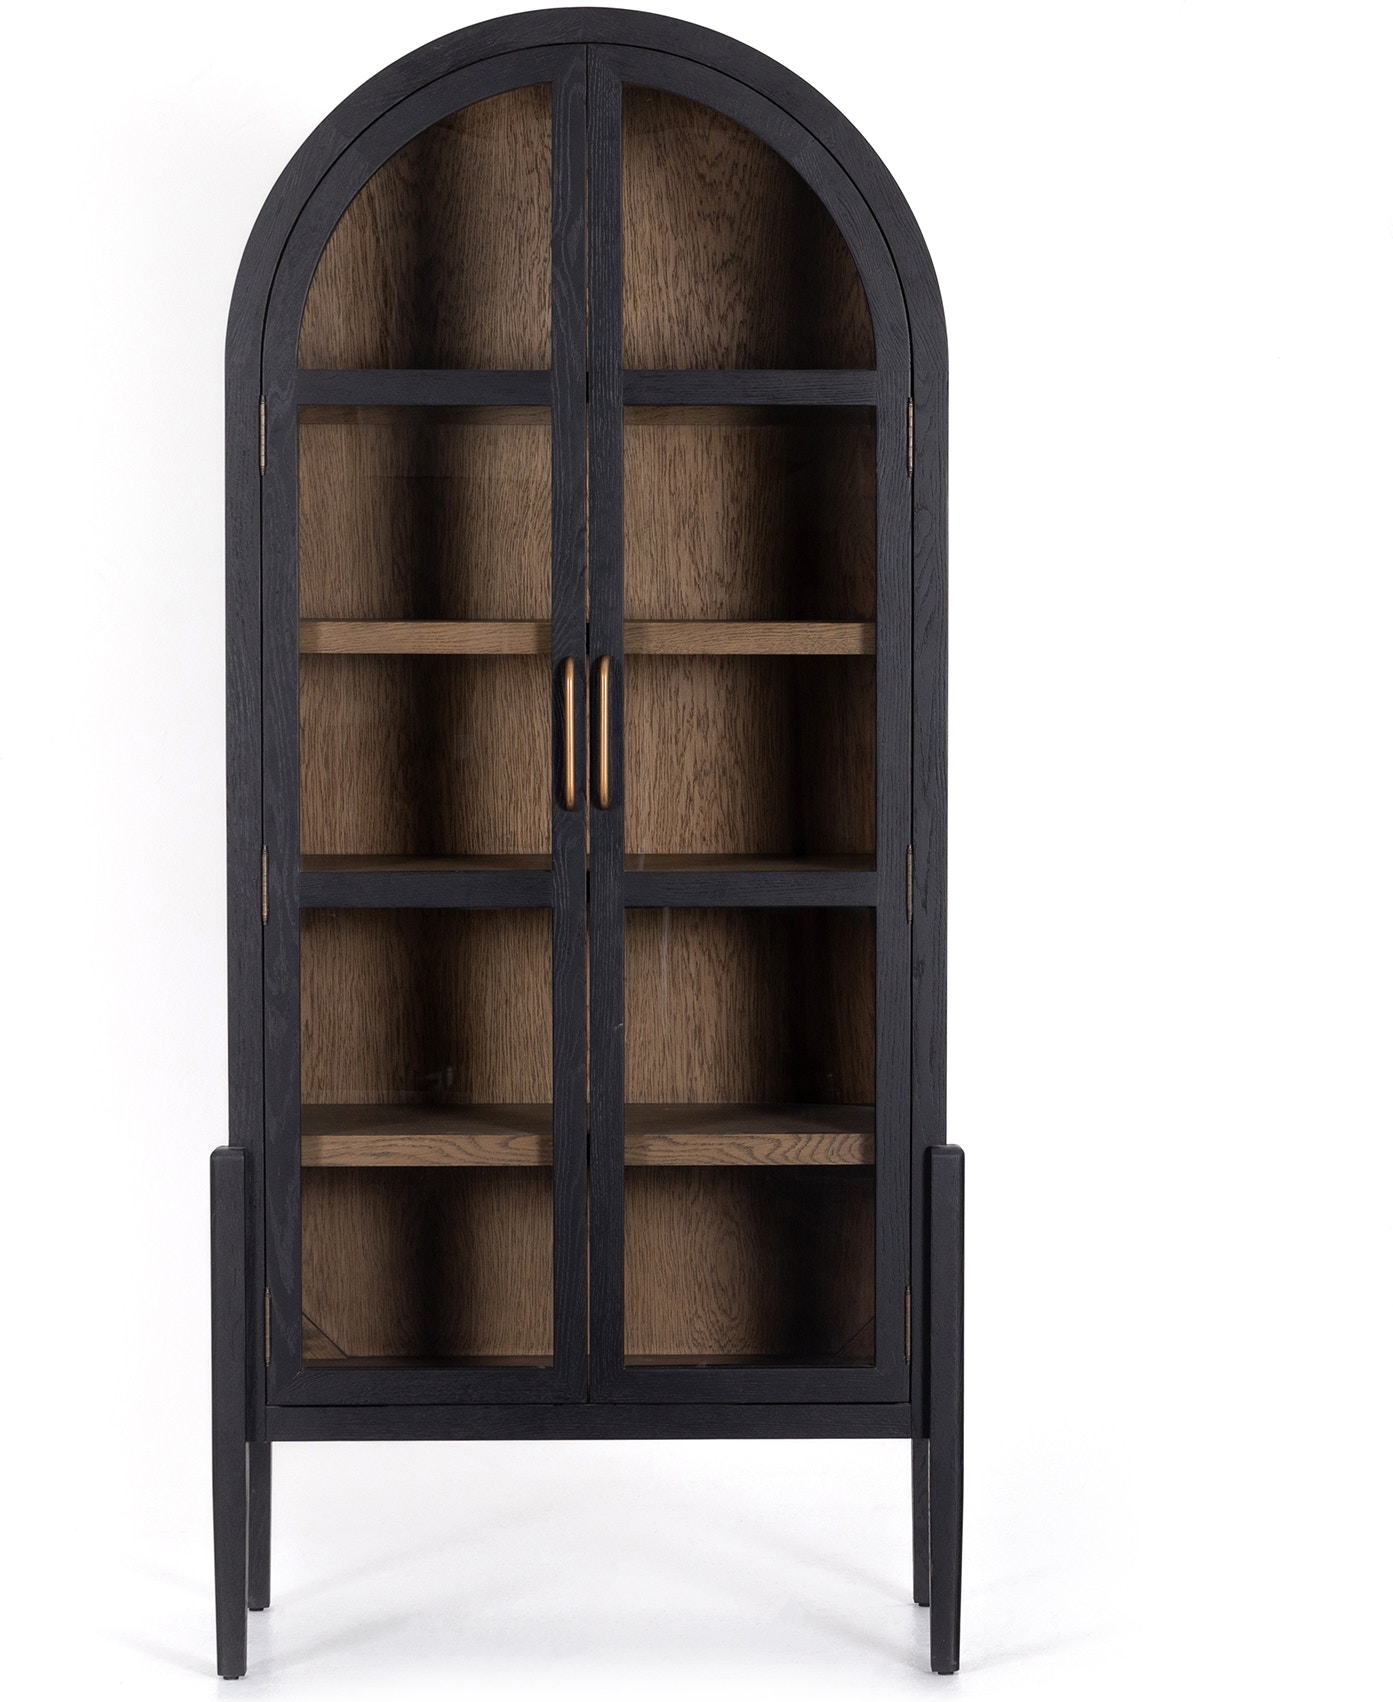 Tolle Cabinet-Drifted Oak | Handtuch-Sets